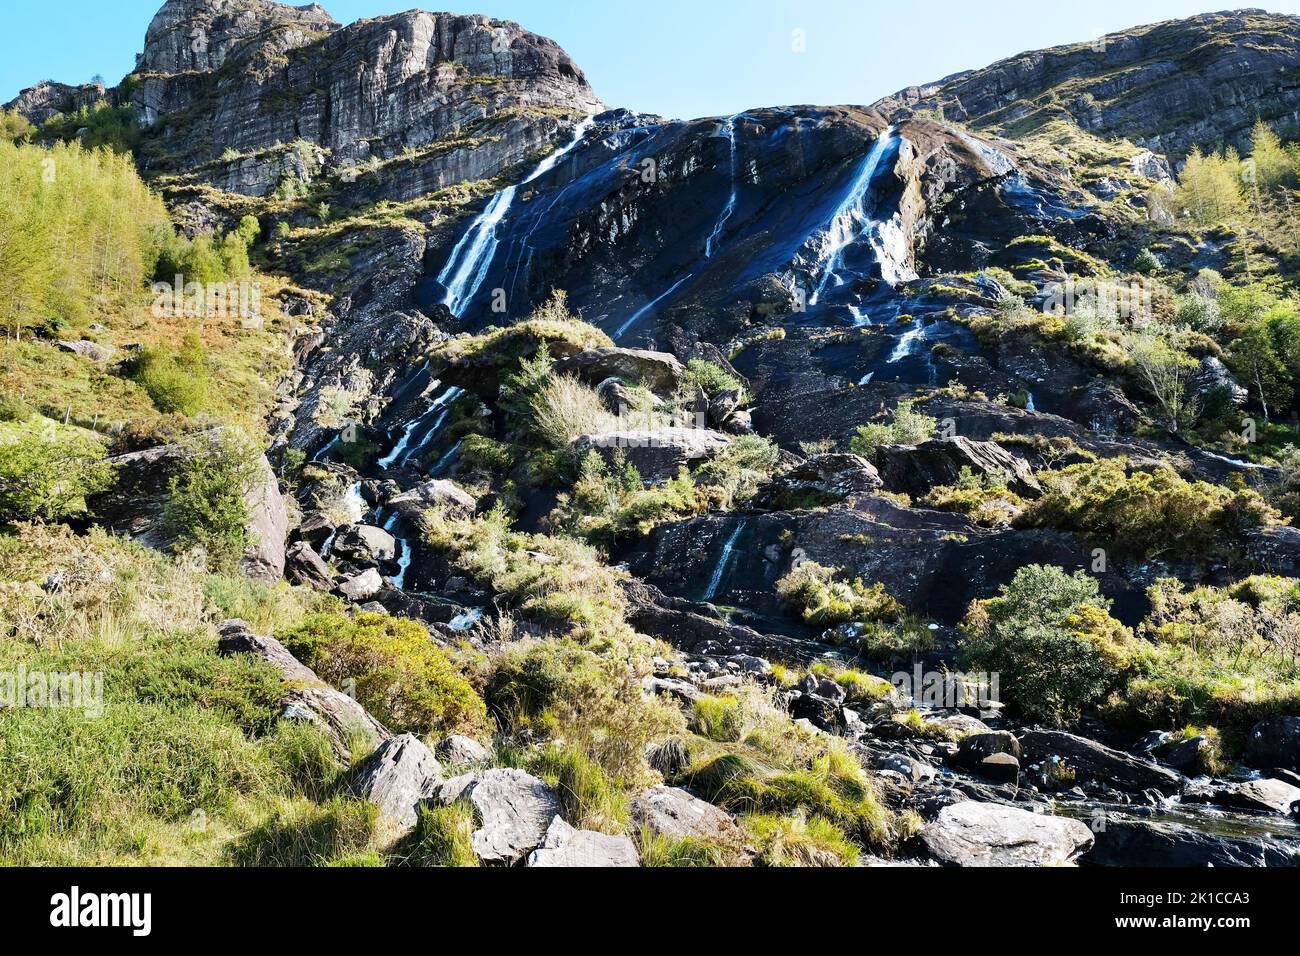 The waterfall at Gleninchaquin Park, County Kerry, Ireland - John Gollop Stock Photo